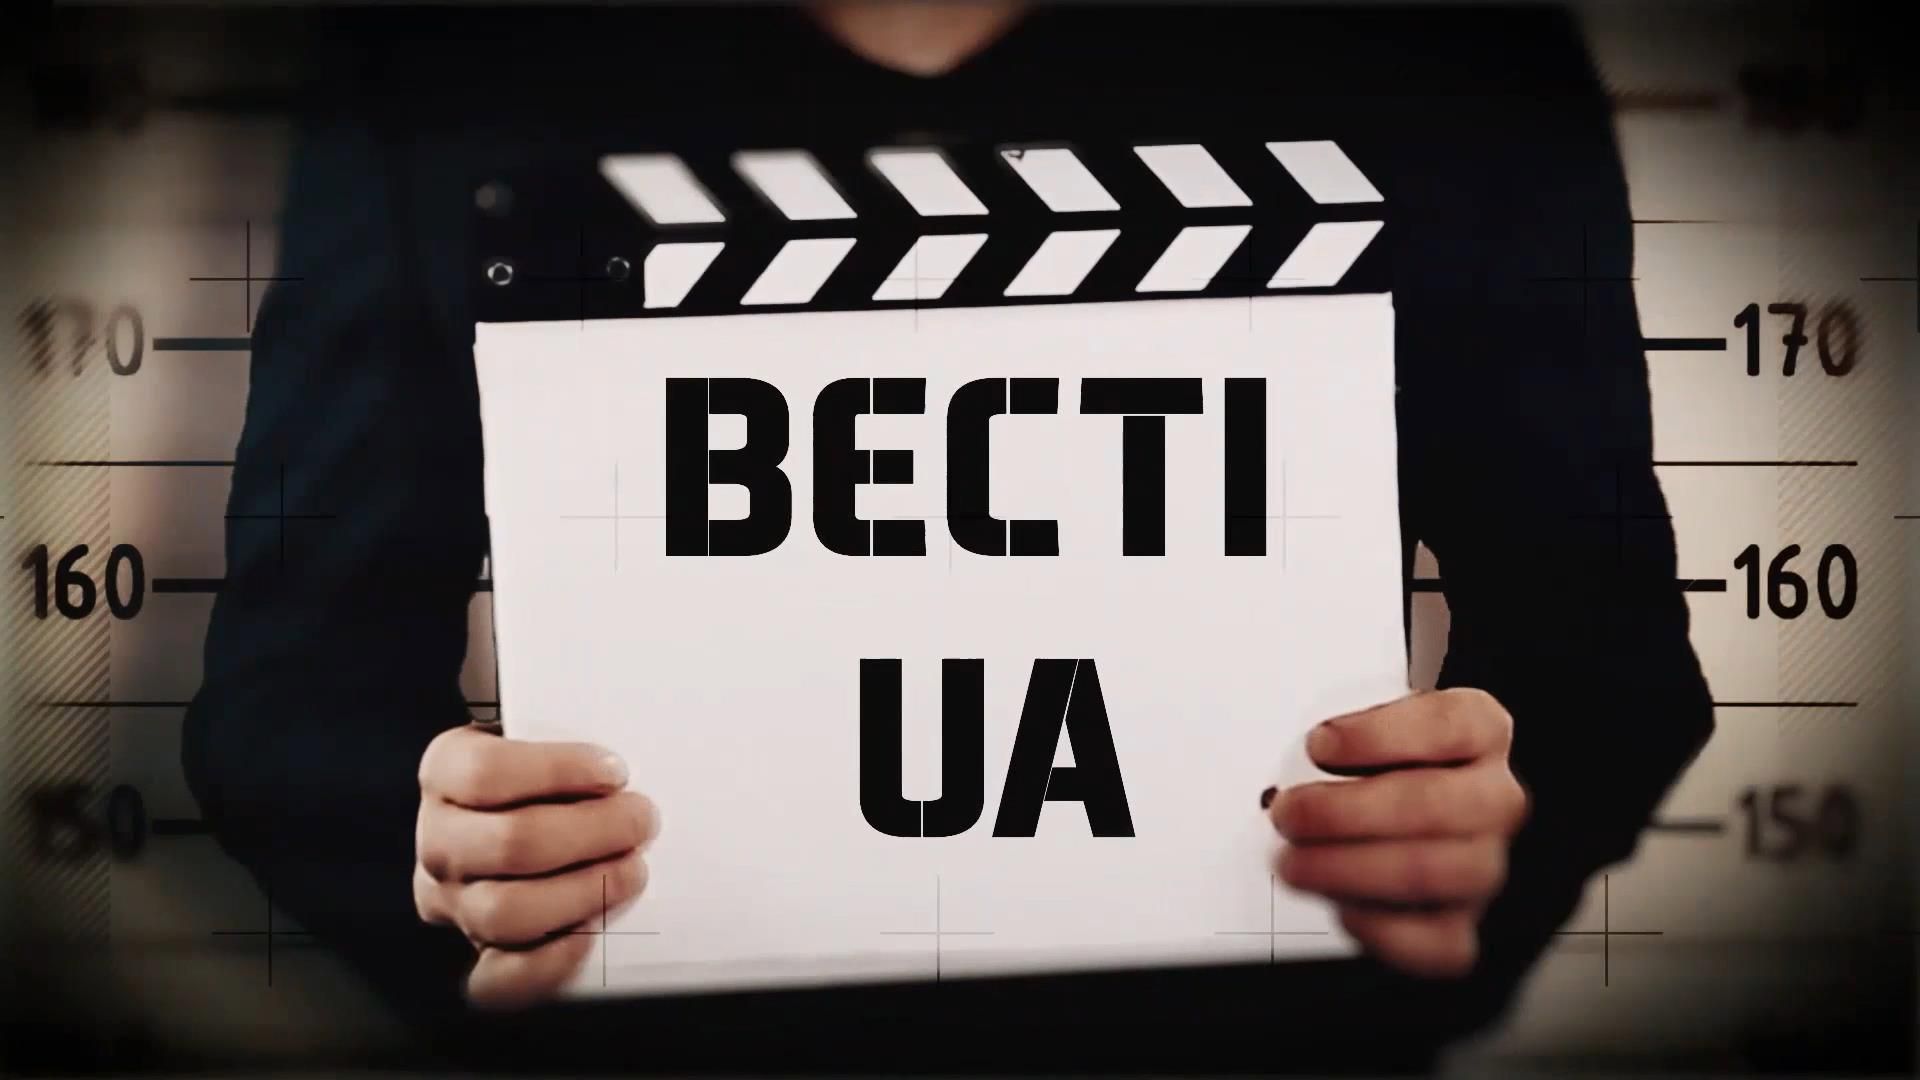 Смотрите "Вести.UA". Байки от боевика Захарченко. Виртуальные отношения Луценко и Януковича